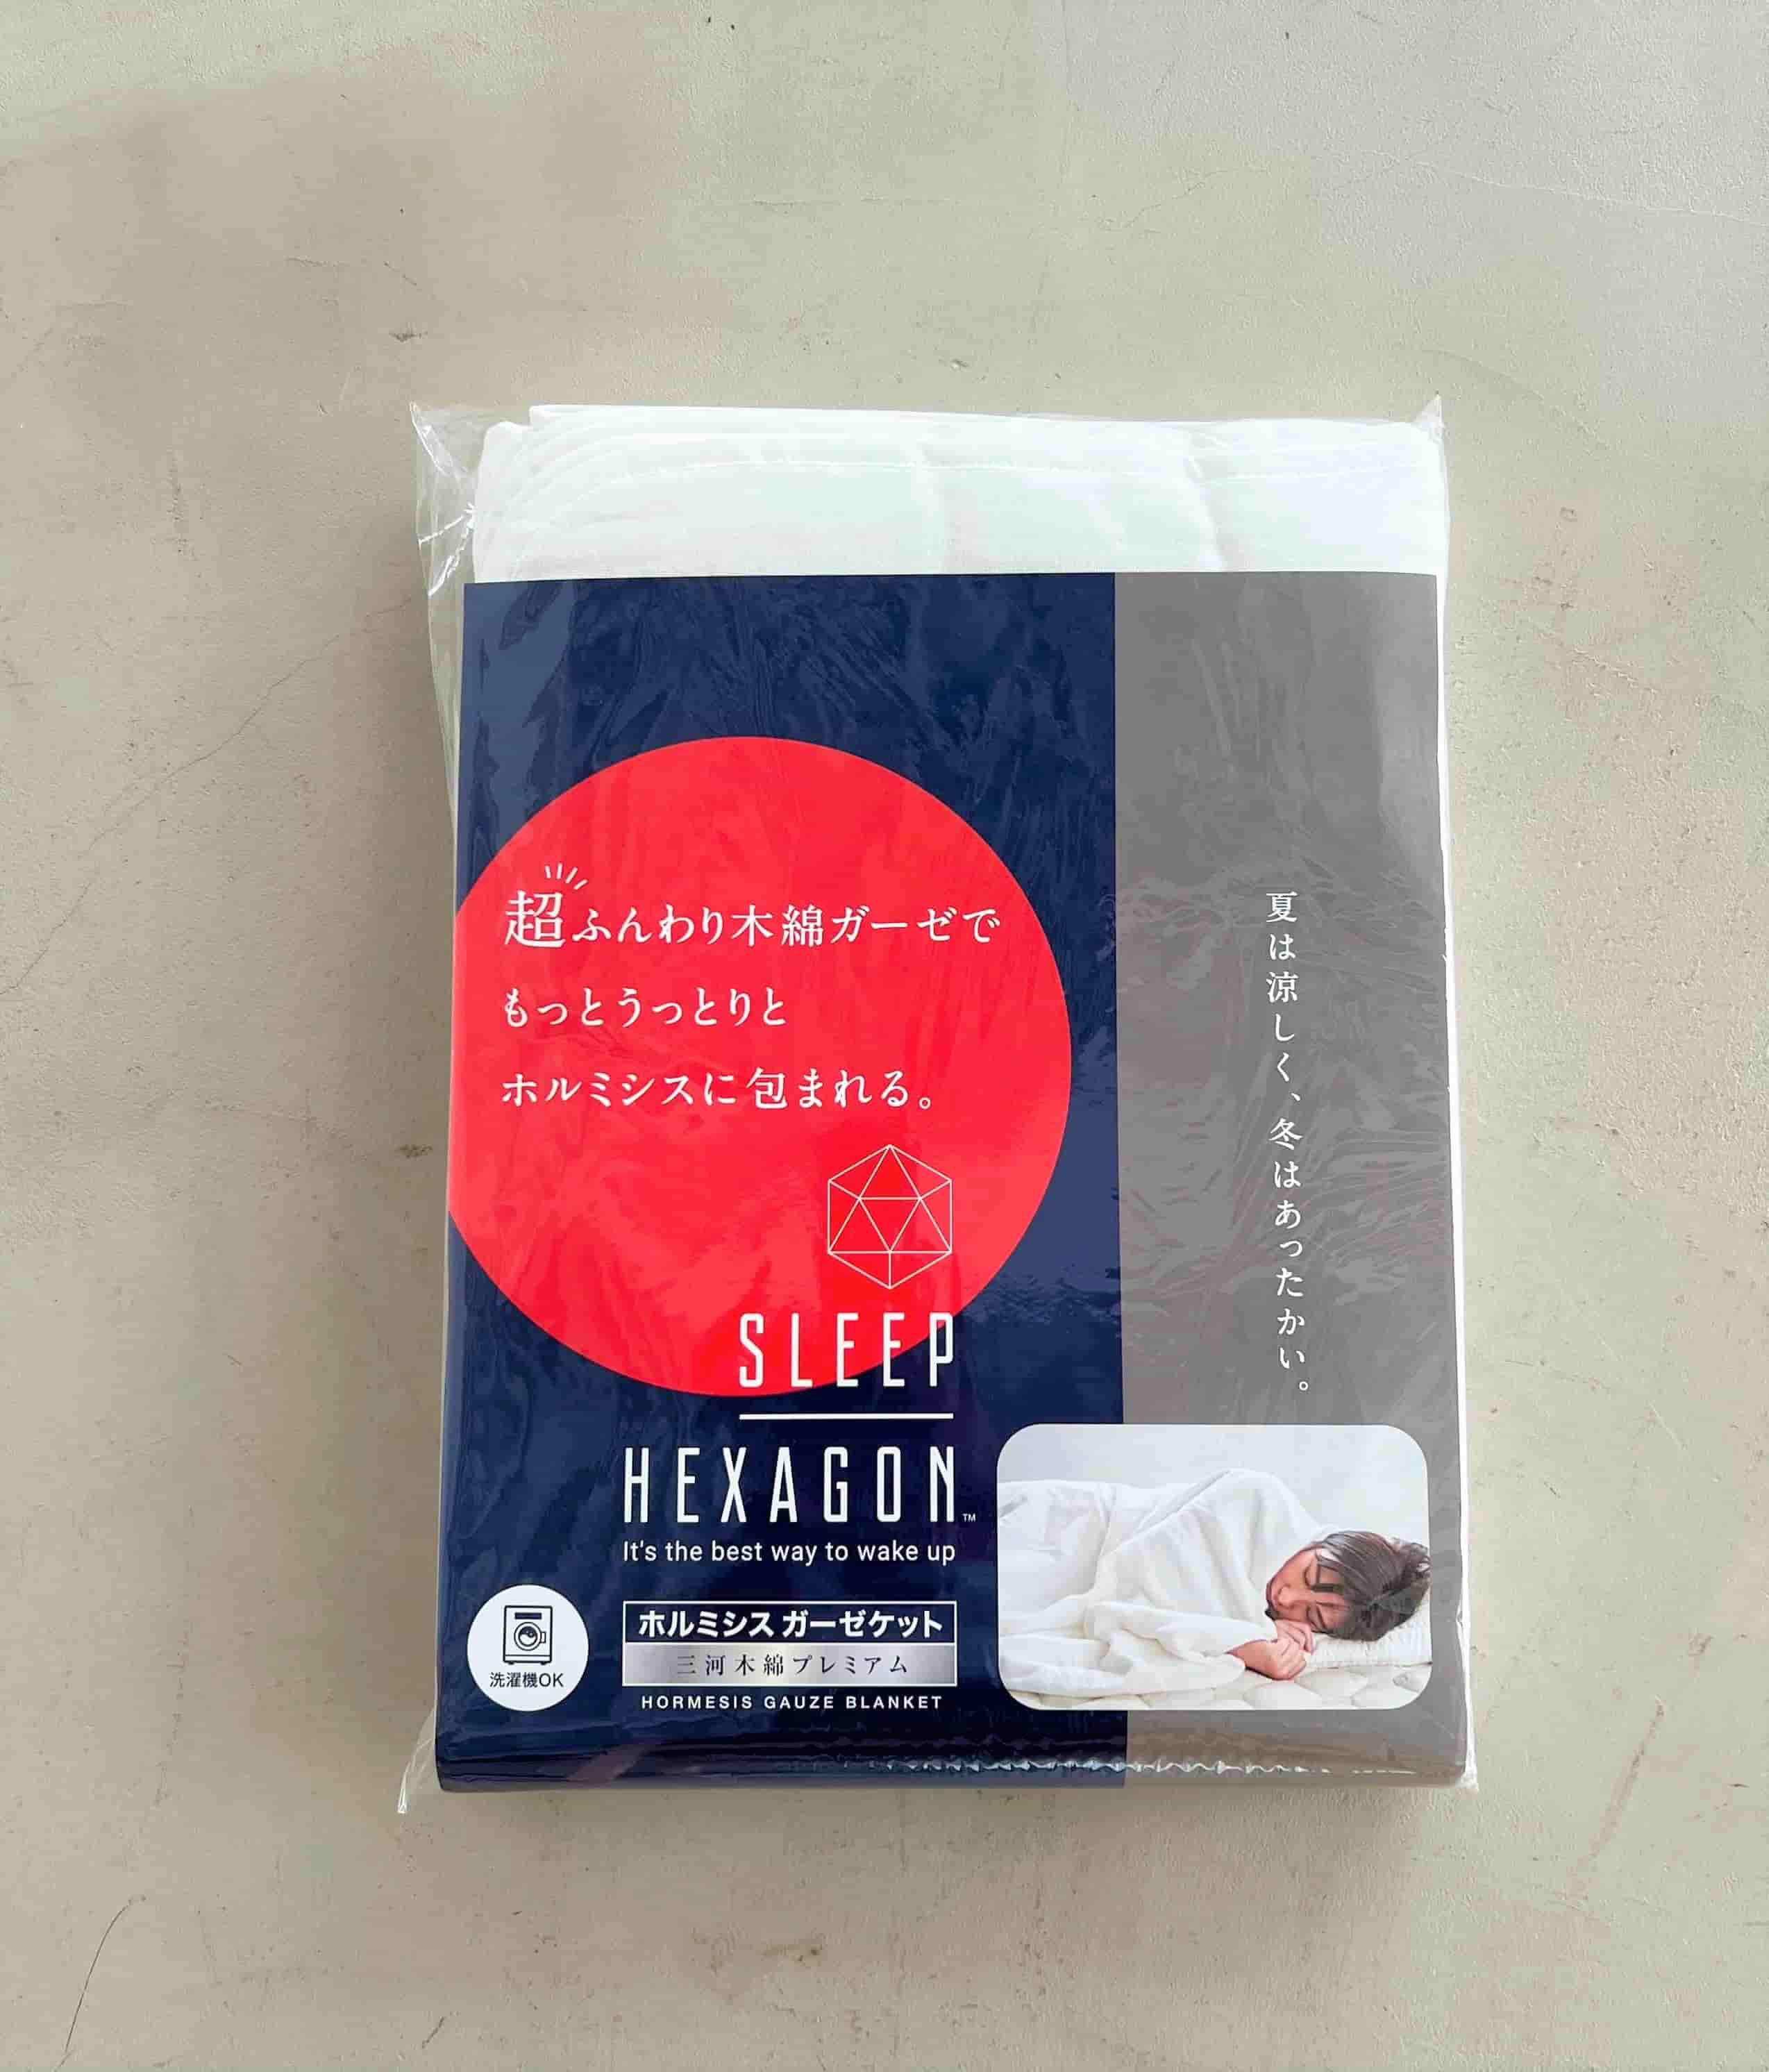 SLEEP HEXAGON　ホルミシスガーゼケット - SLEEP HEXAGON(スリープヘキサゴン)公式サイト